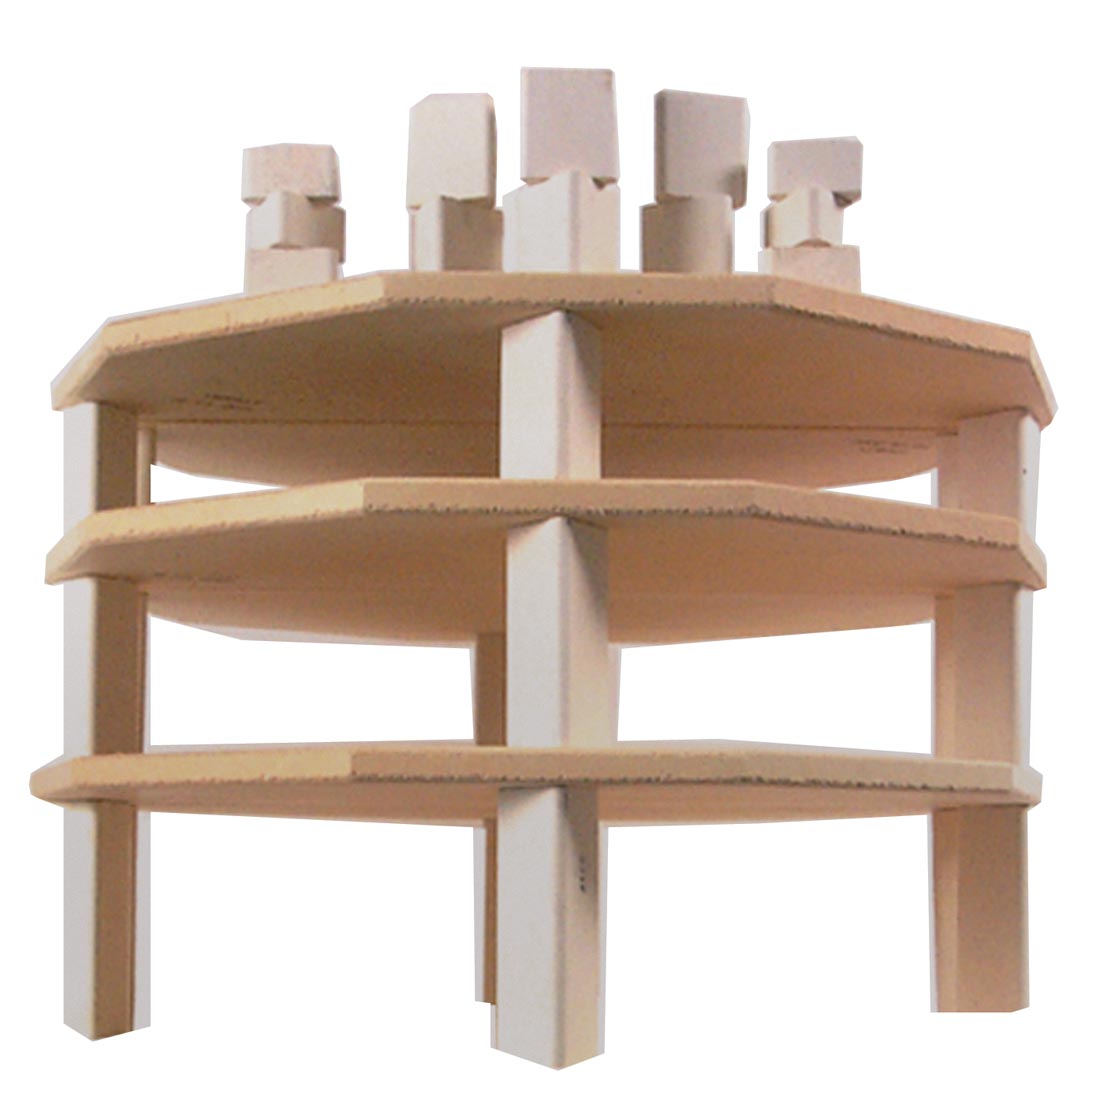 Skutt Model 1218-3 Kiln Furniture Kit